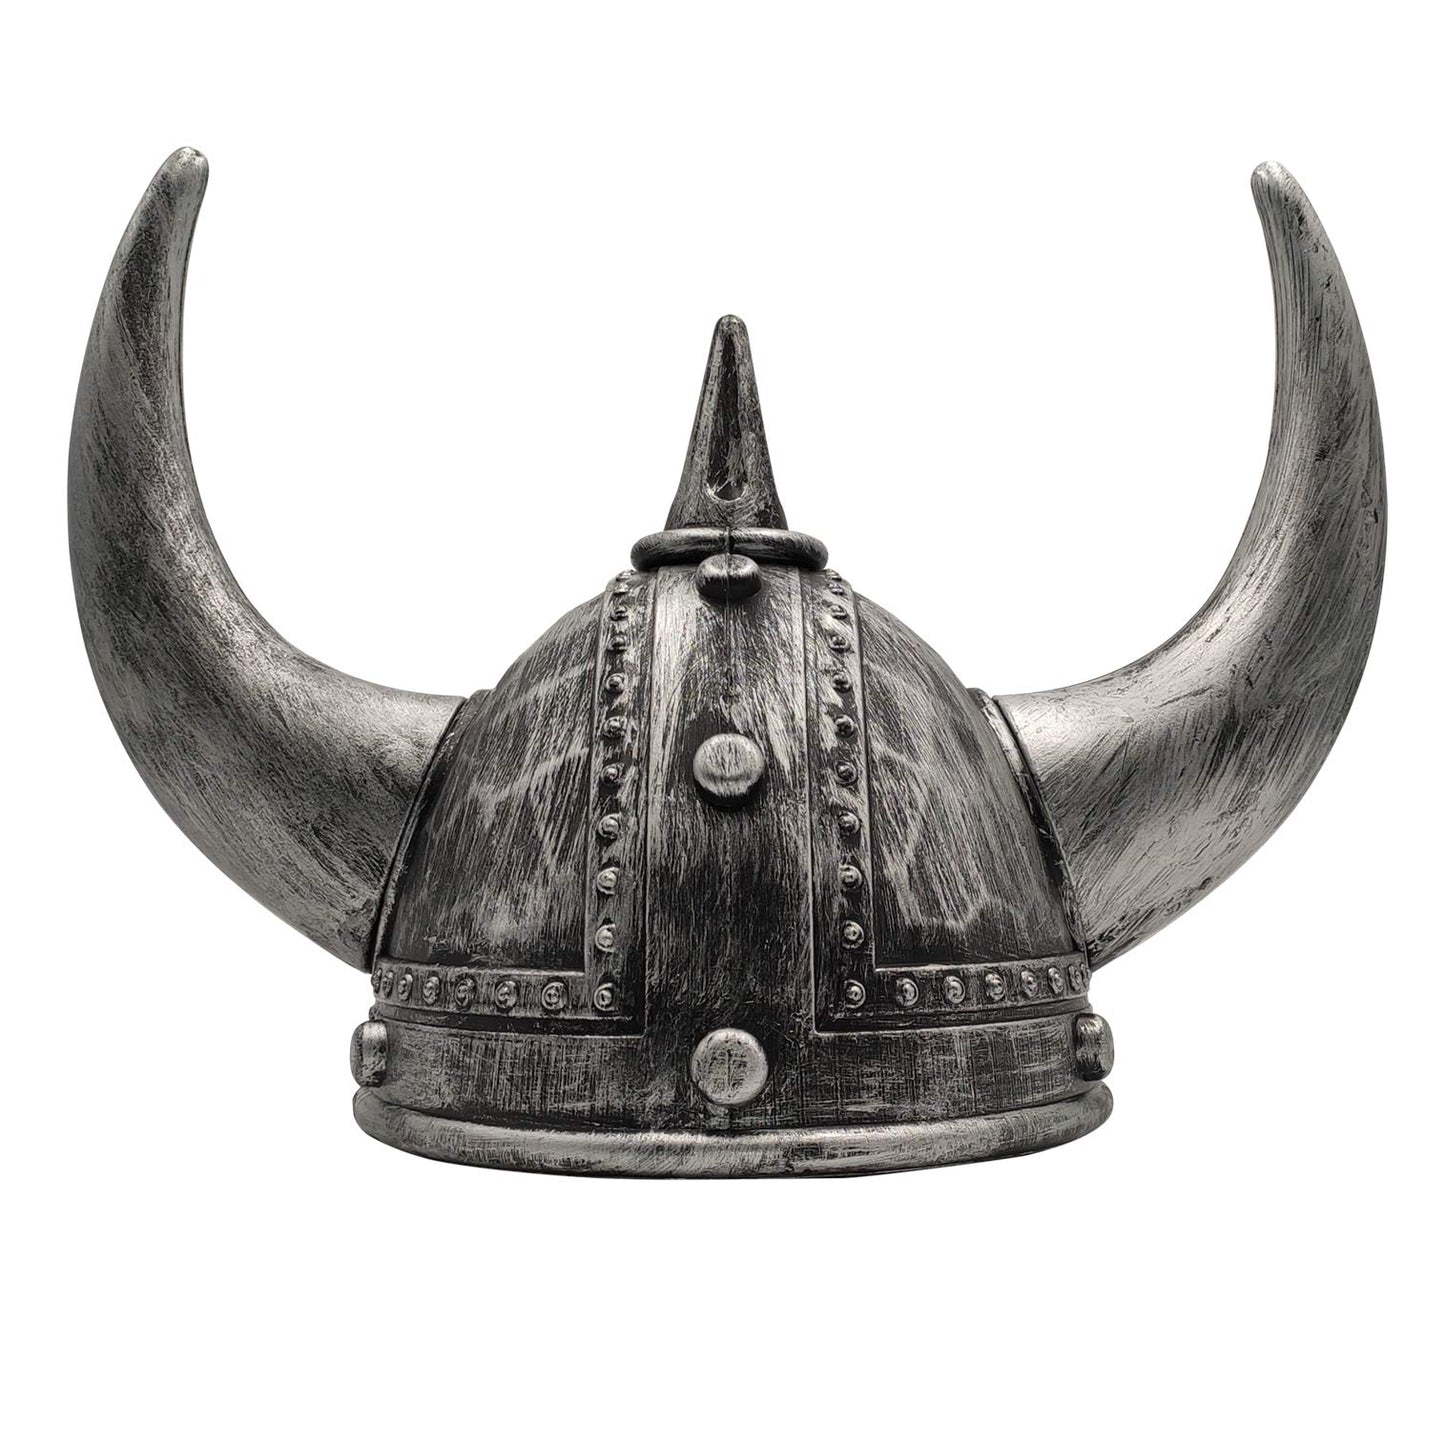 LOOYAR Middle Ages Medieval Viking Age Horned Viking Helmet Berserker Soldier Warrior Costume Hat Sallet Adult Toy for Battle Play Halloween Cosplay LARP